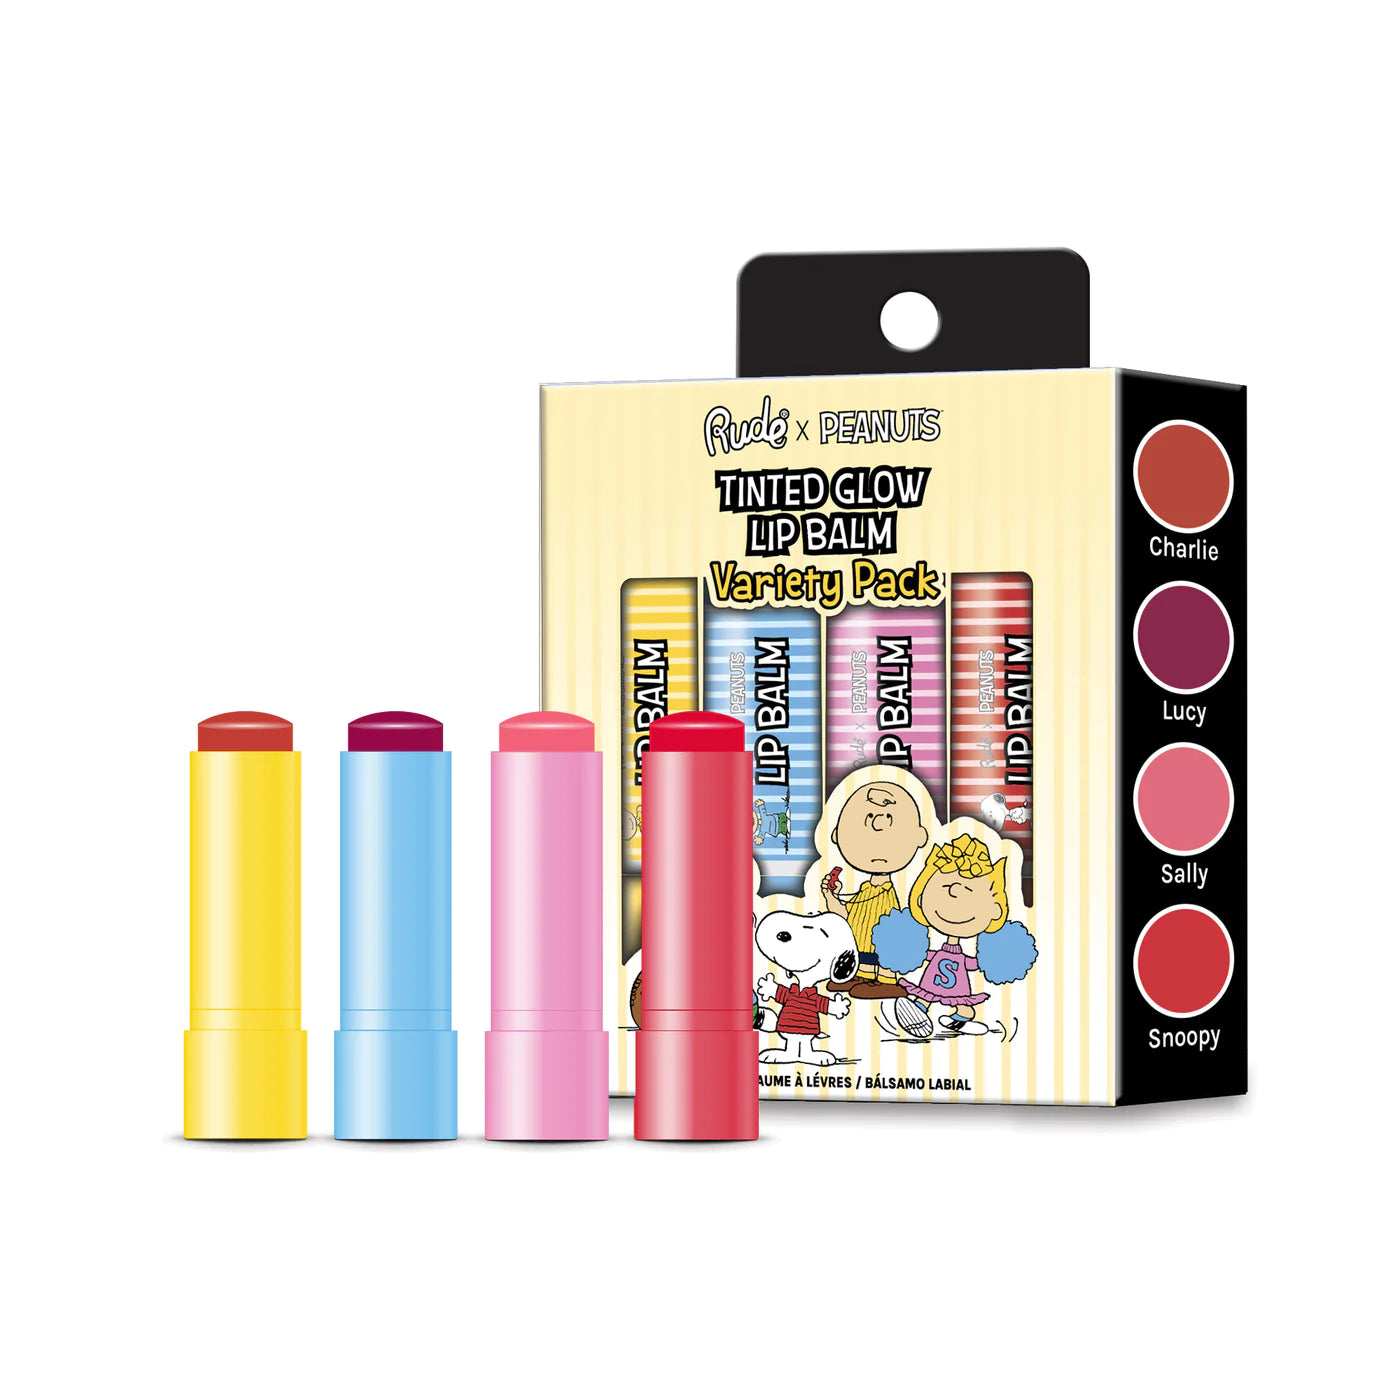 Rude Cosmetics - Peanuts Tinted Glow Lip Balm Variety Pack